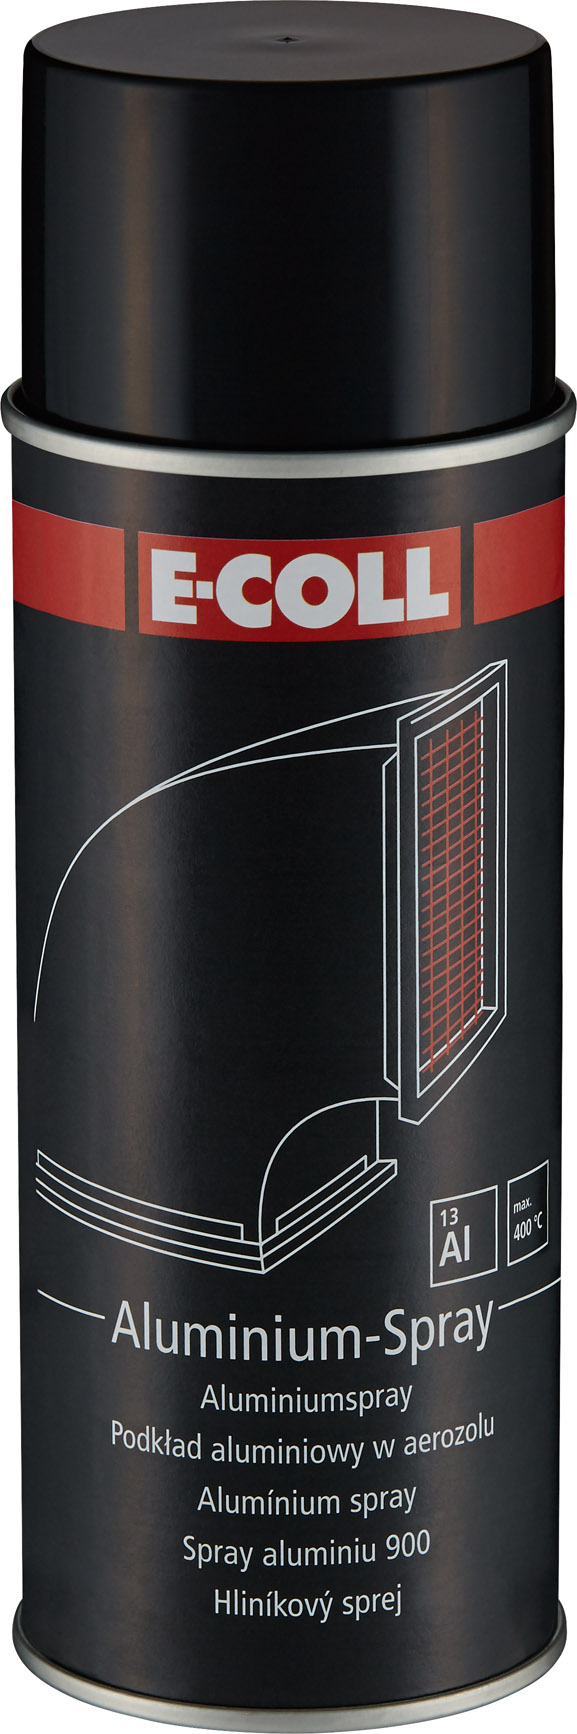 Picture of Alu-Spray 900 400ml E-COLL EE